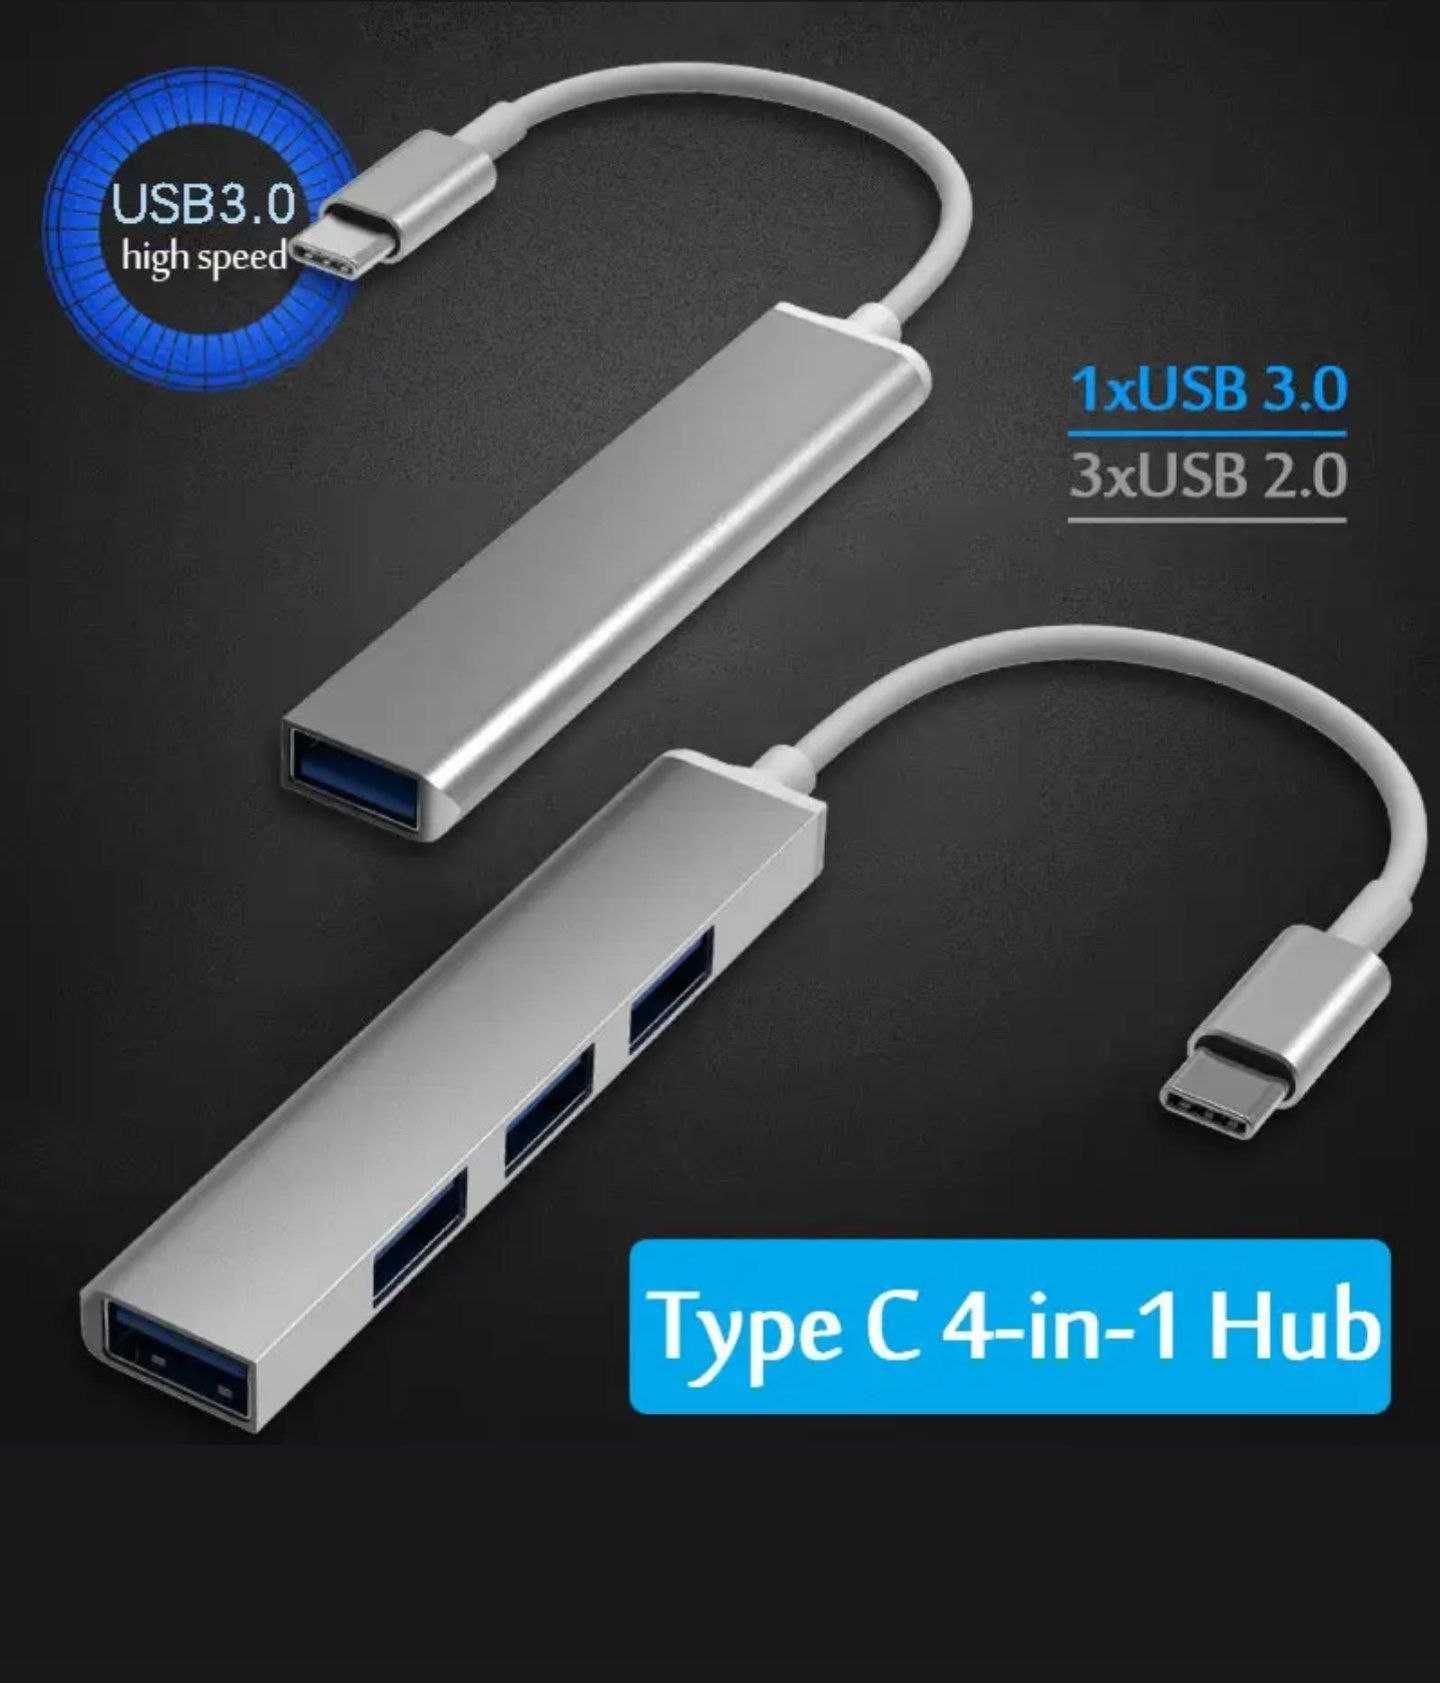 НОВЫЙ USB 3.0 hub юсб хаб удлинитель переходник type-c hub Цена 50тыс